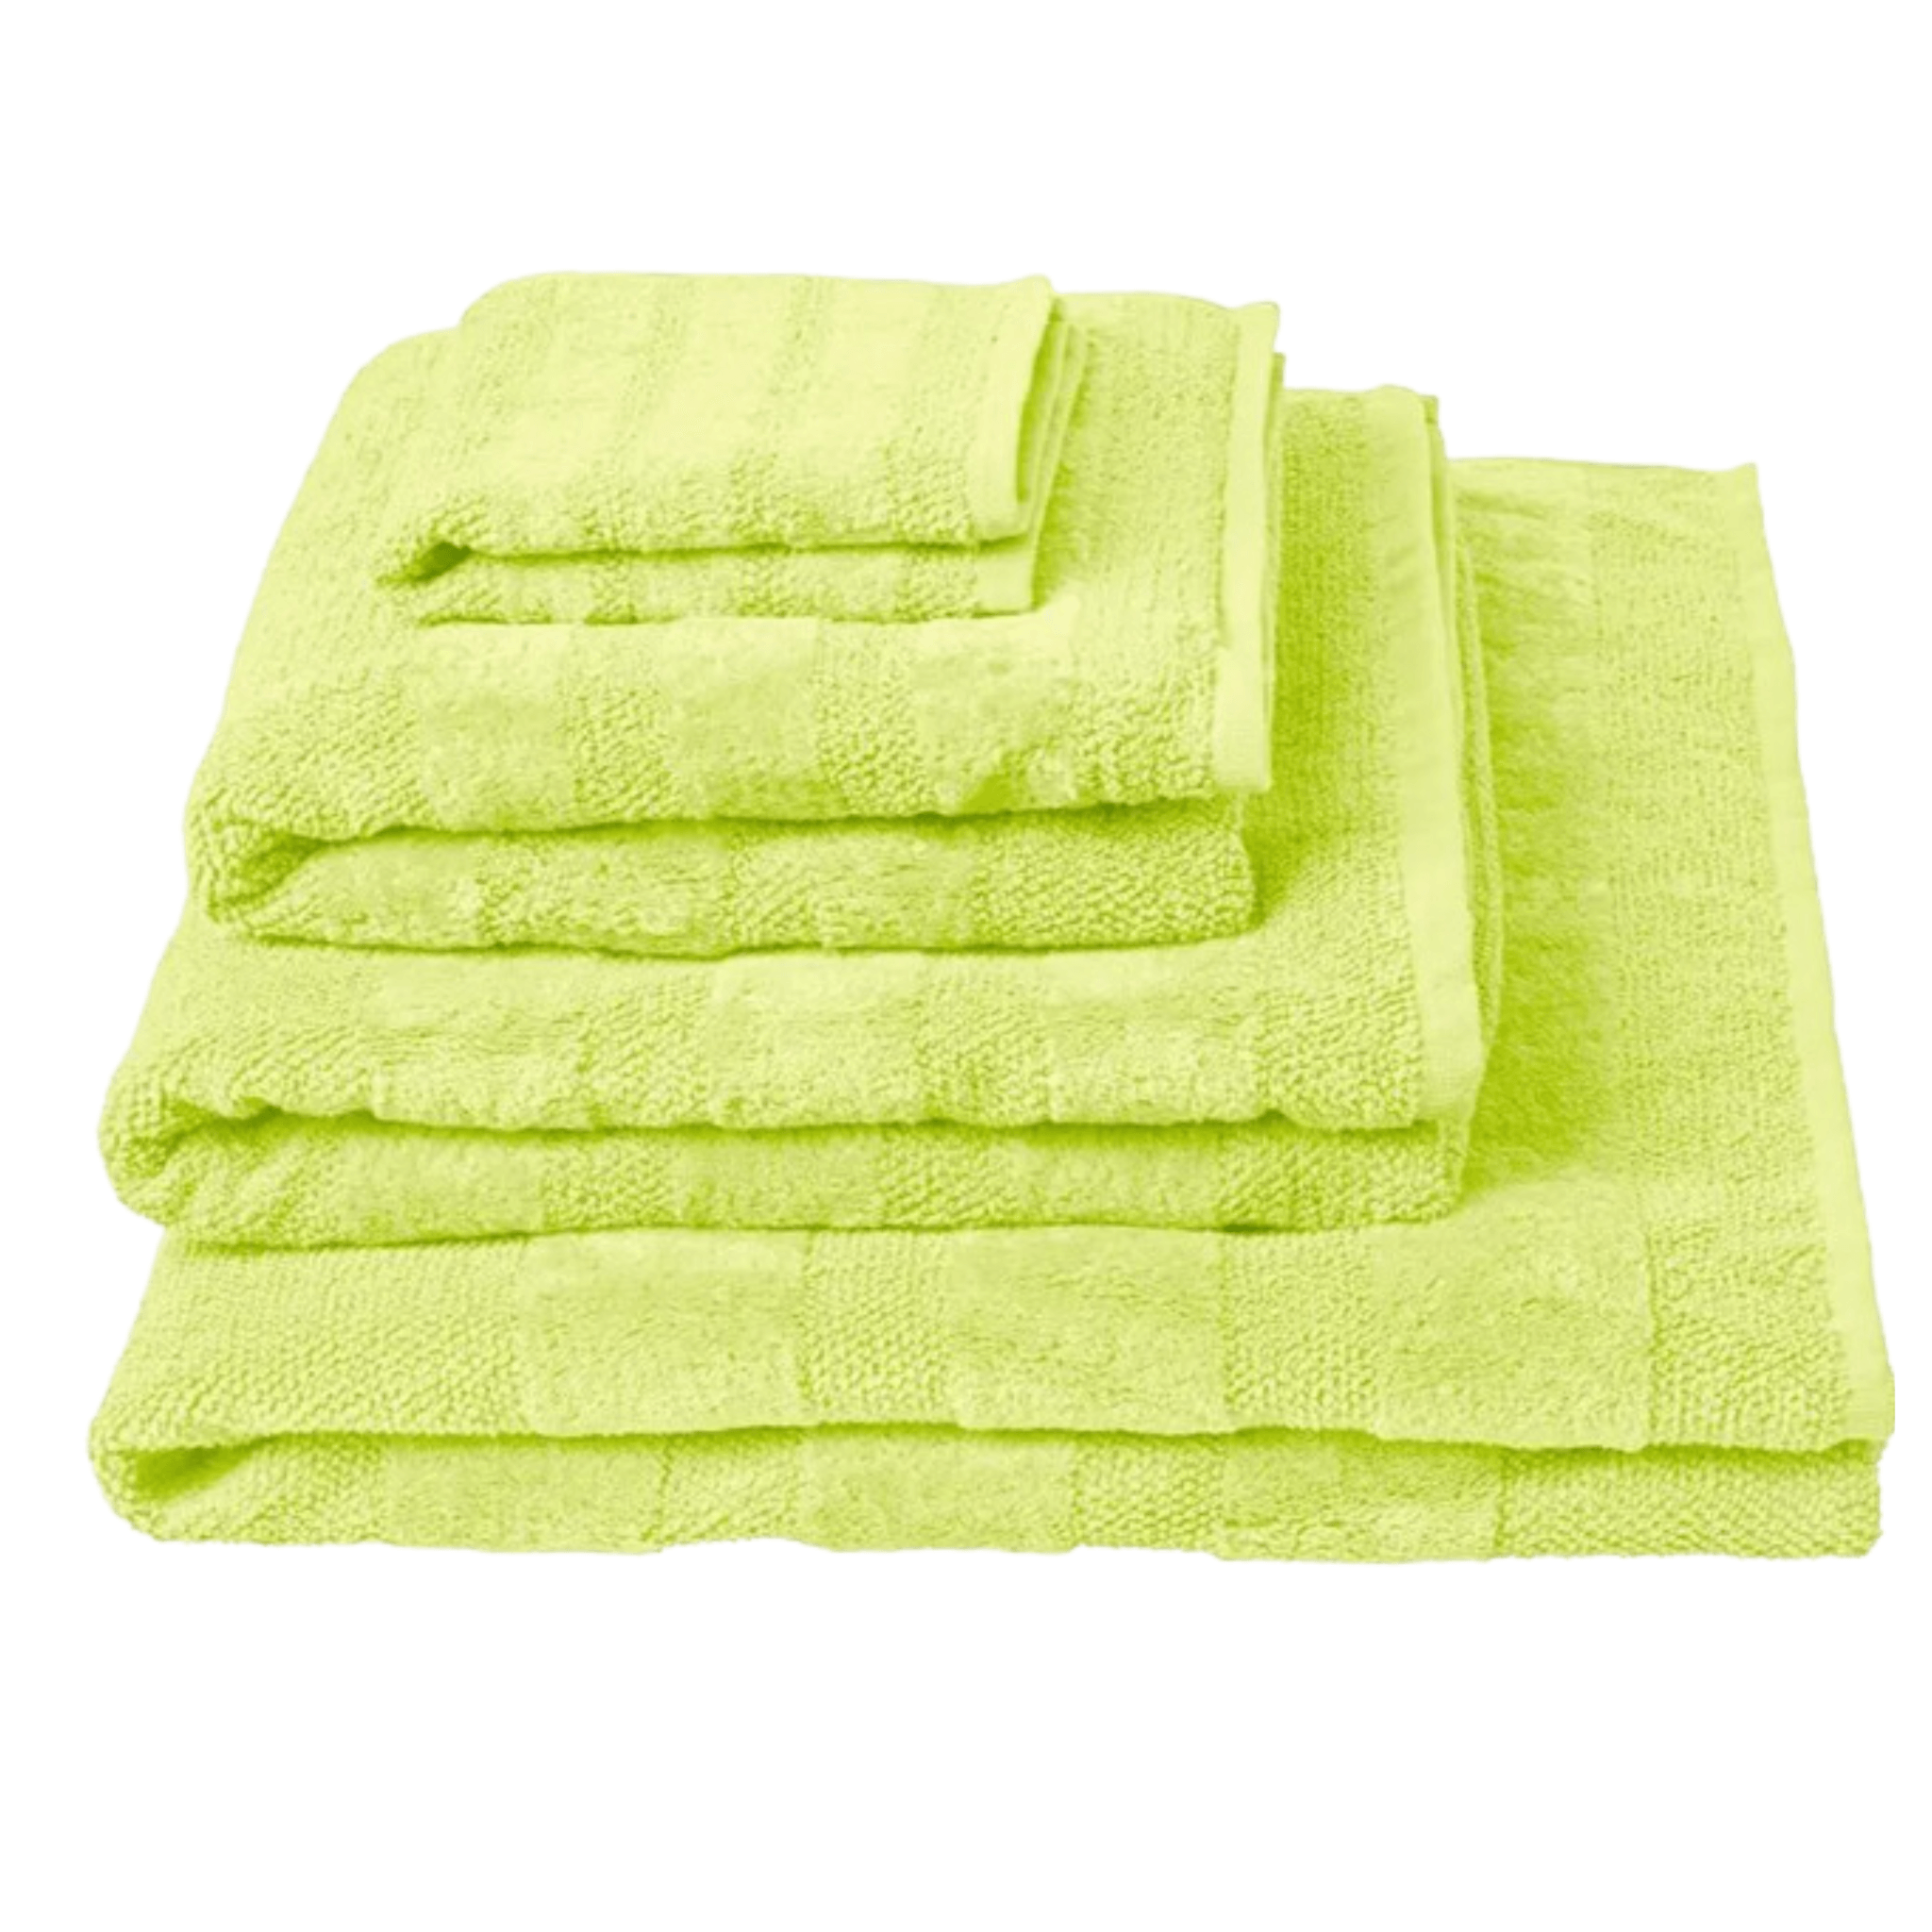 Plush Devon Terry Scalloped Bath Towels With Optional Monogram